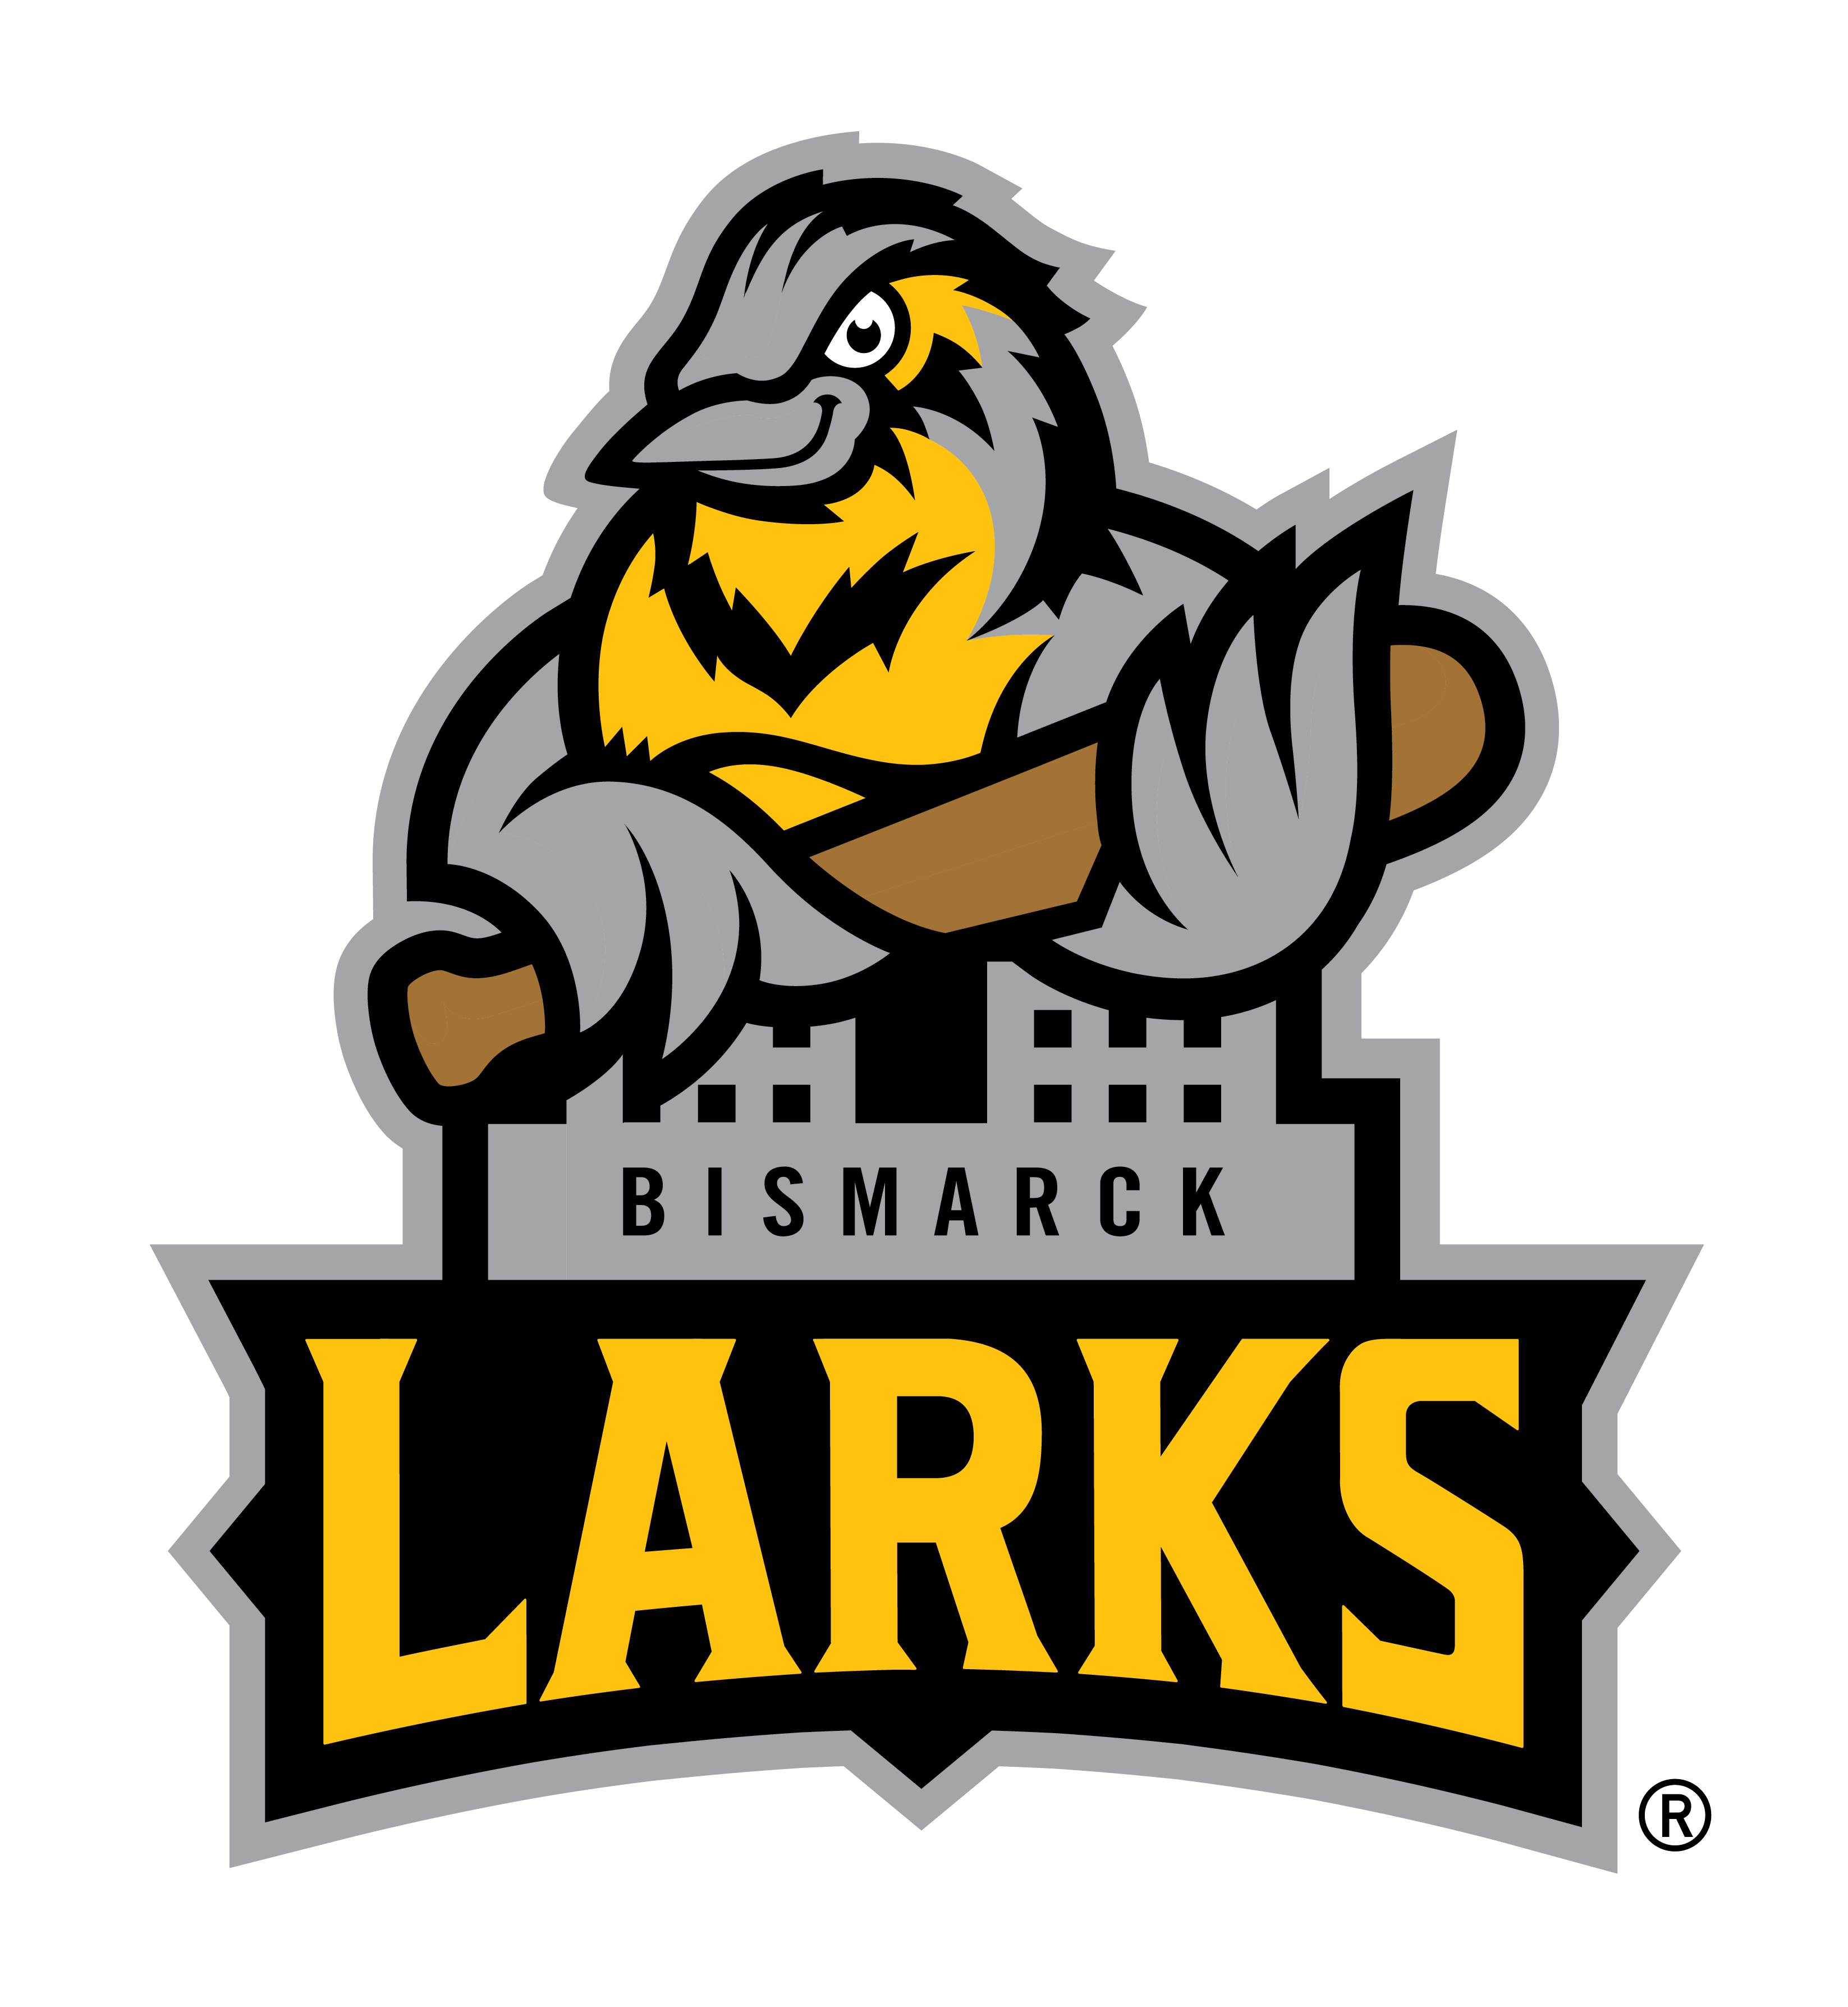 This is the Bismarck Larks Logo.